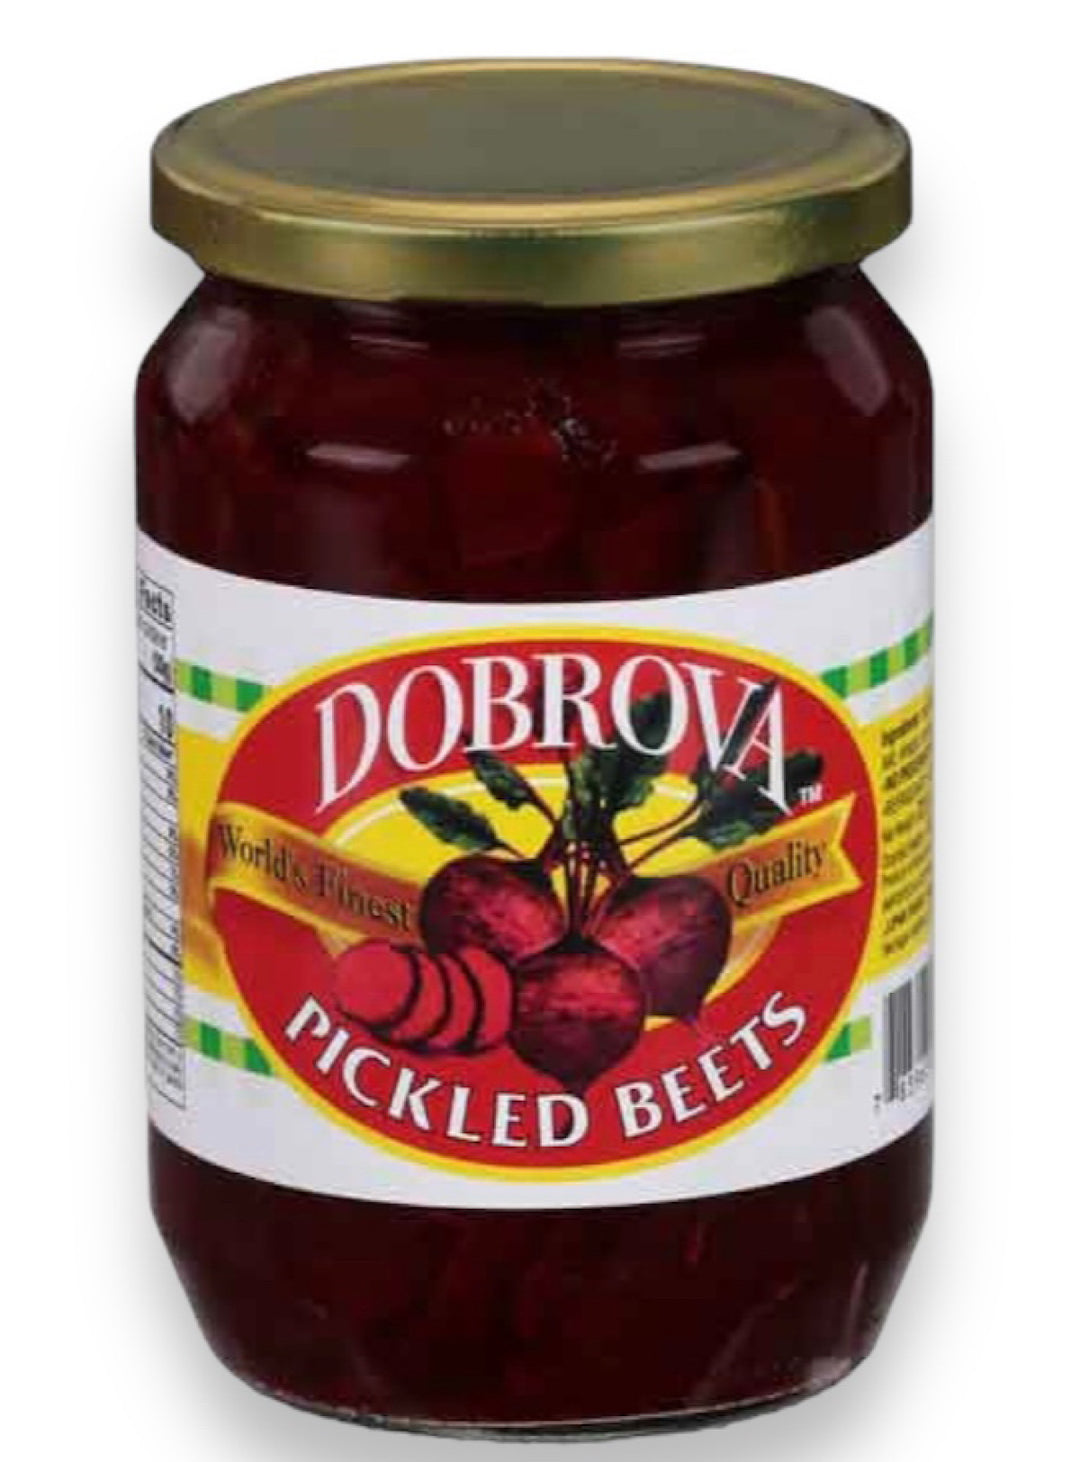 Pickled Beets - Dobrova - 650g